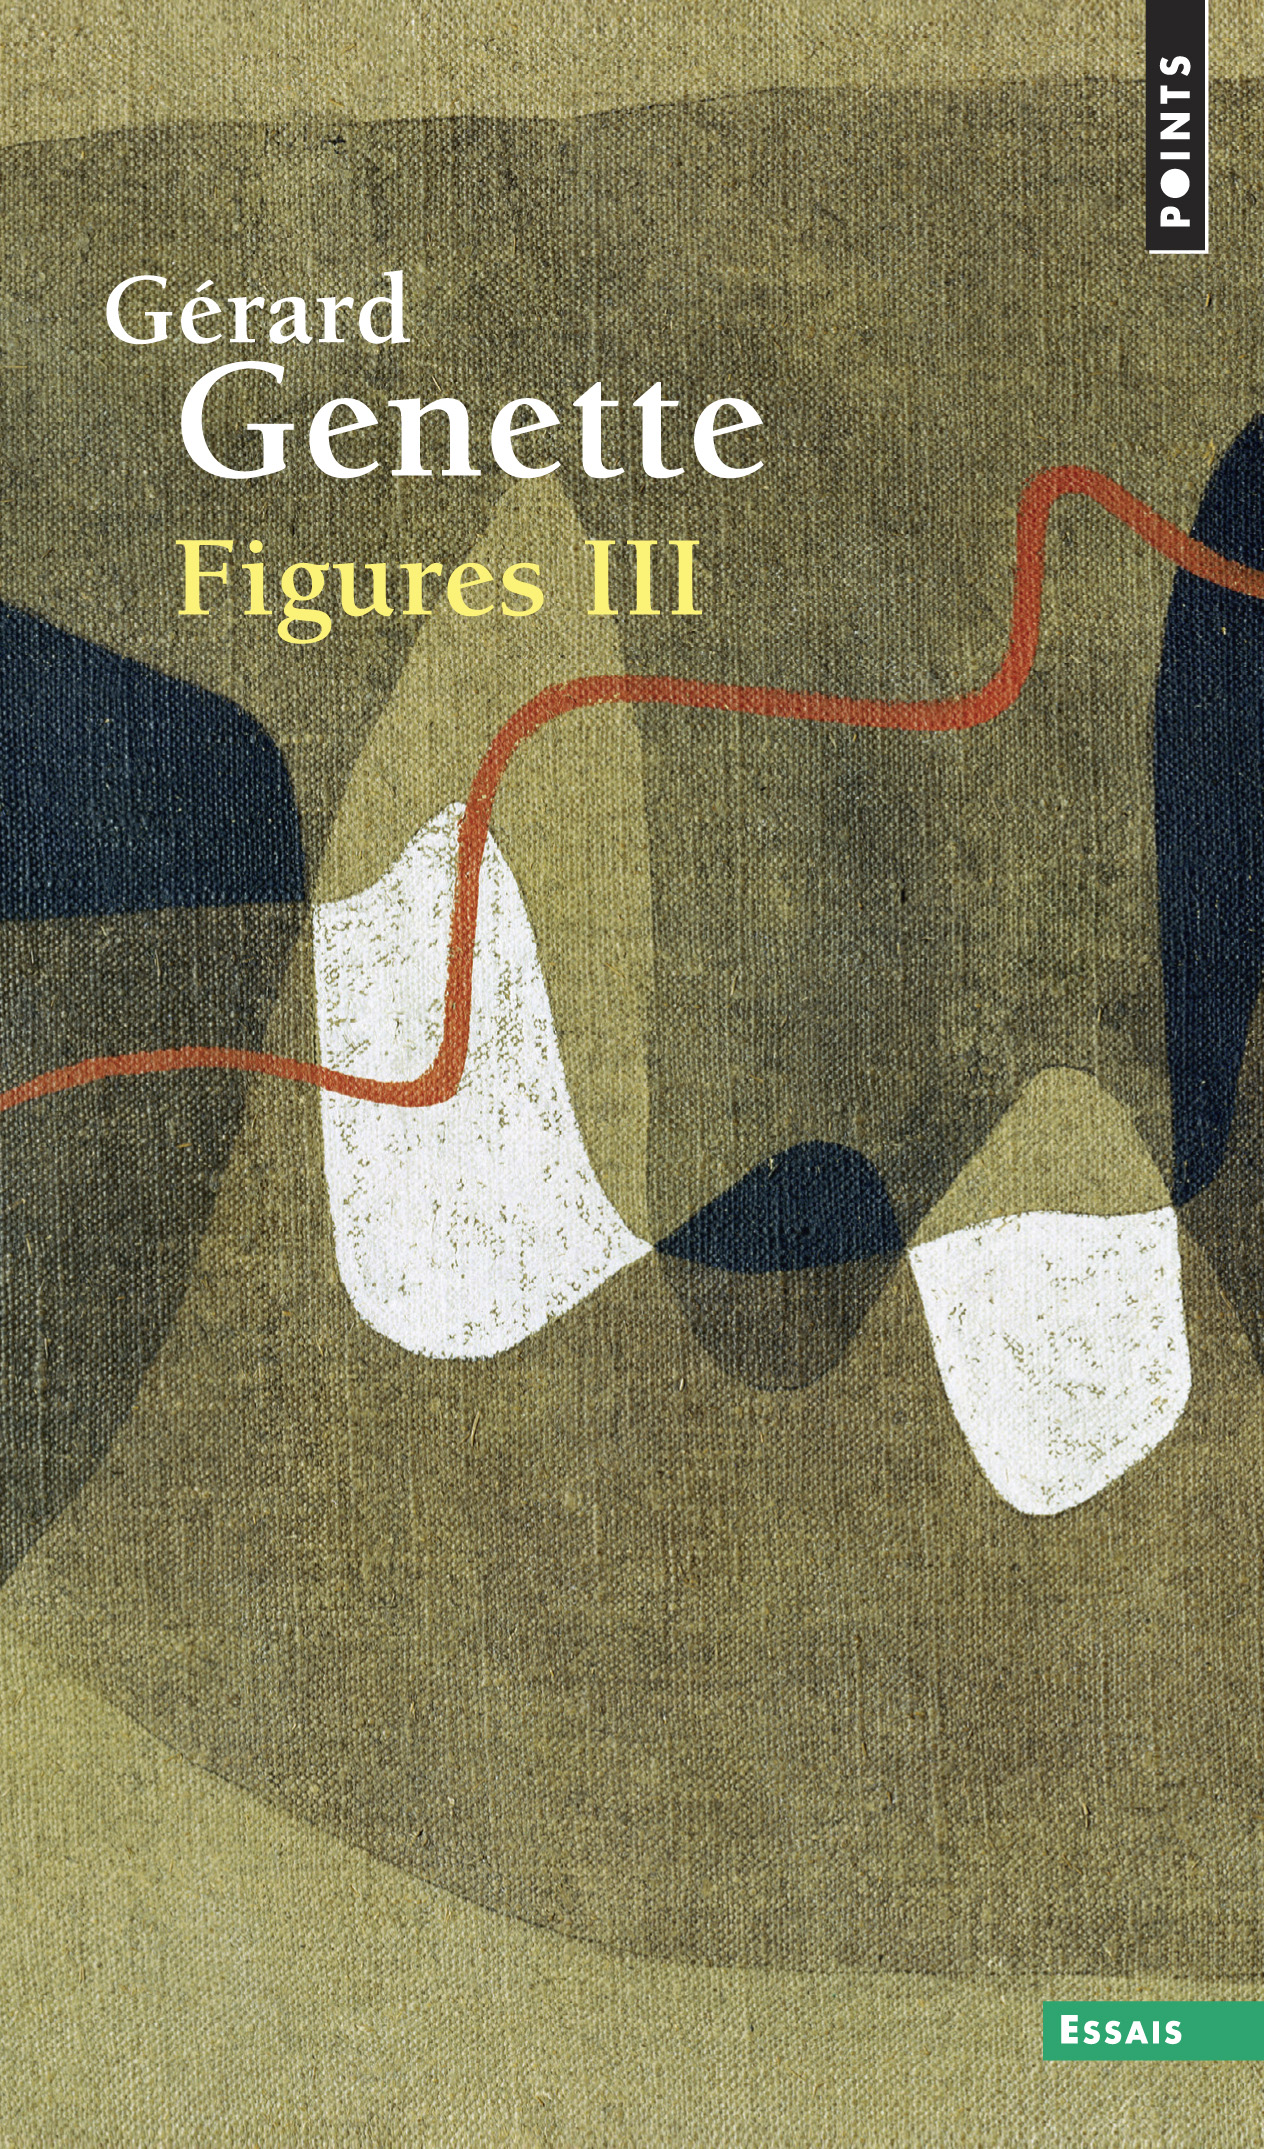 Figures III 141301-crg.indd